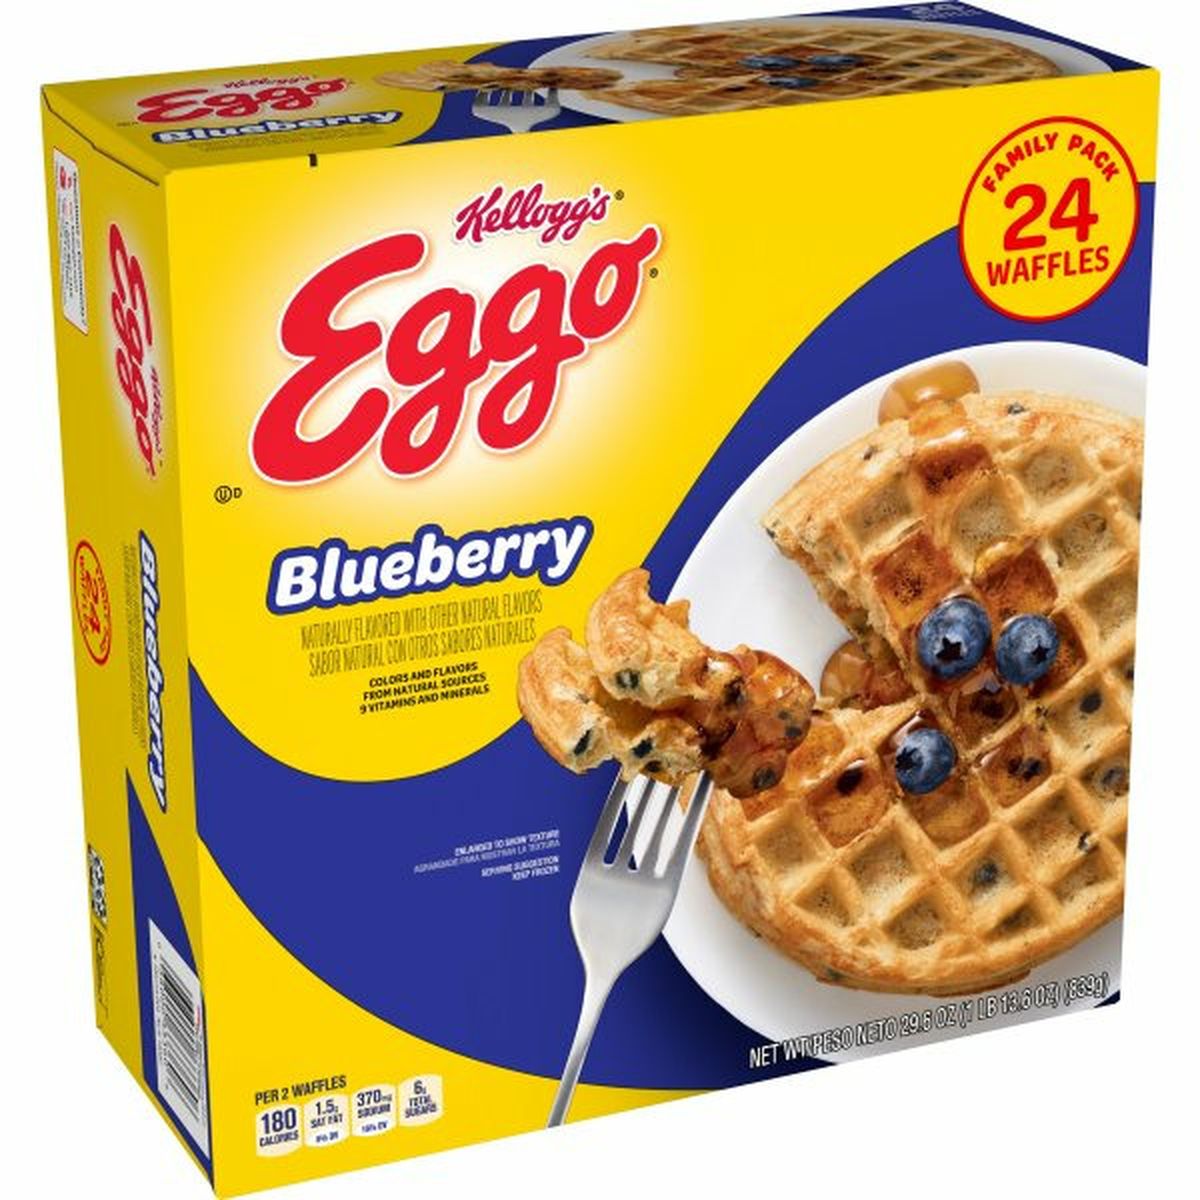 Calories in Eggo Frozen Breakfast Eggo Frozen Waffles, Blueberry, Family Pack, Easy Breakfast, 24ct 29.6oz